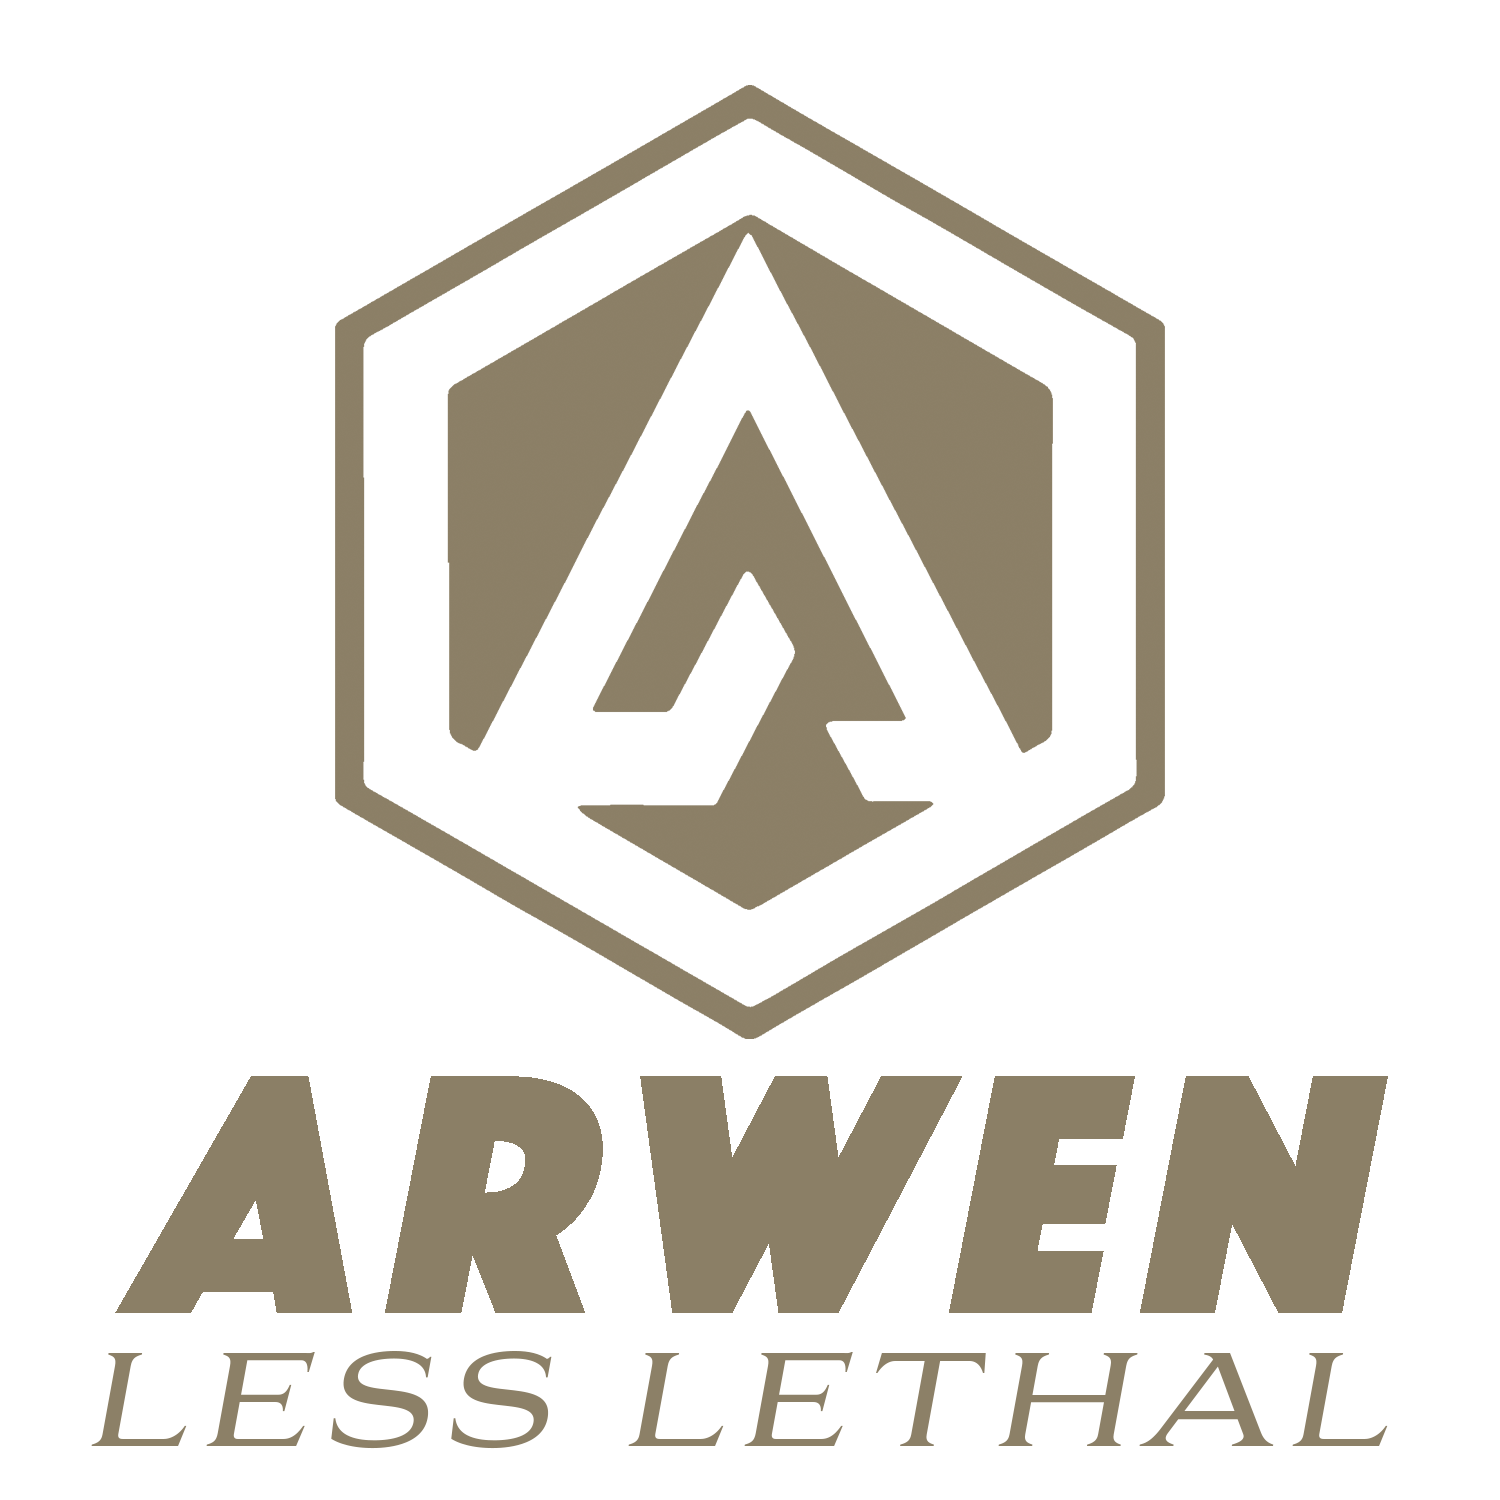 ARWEN Less Lethal